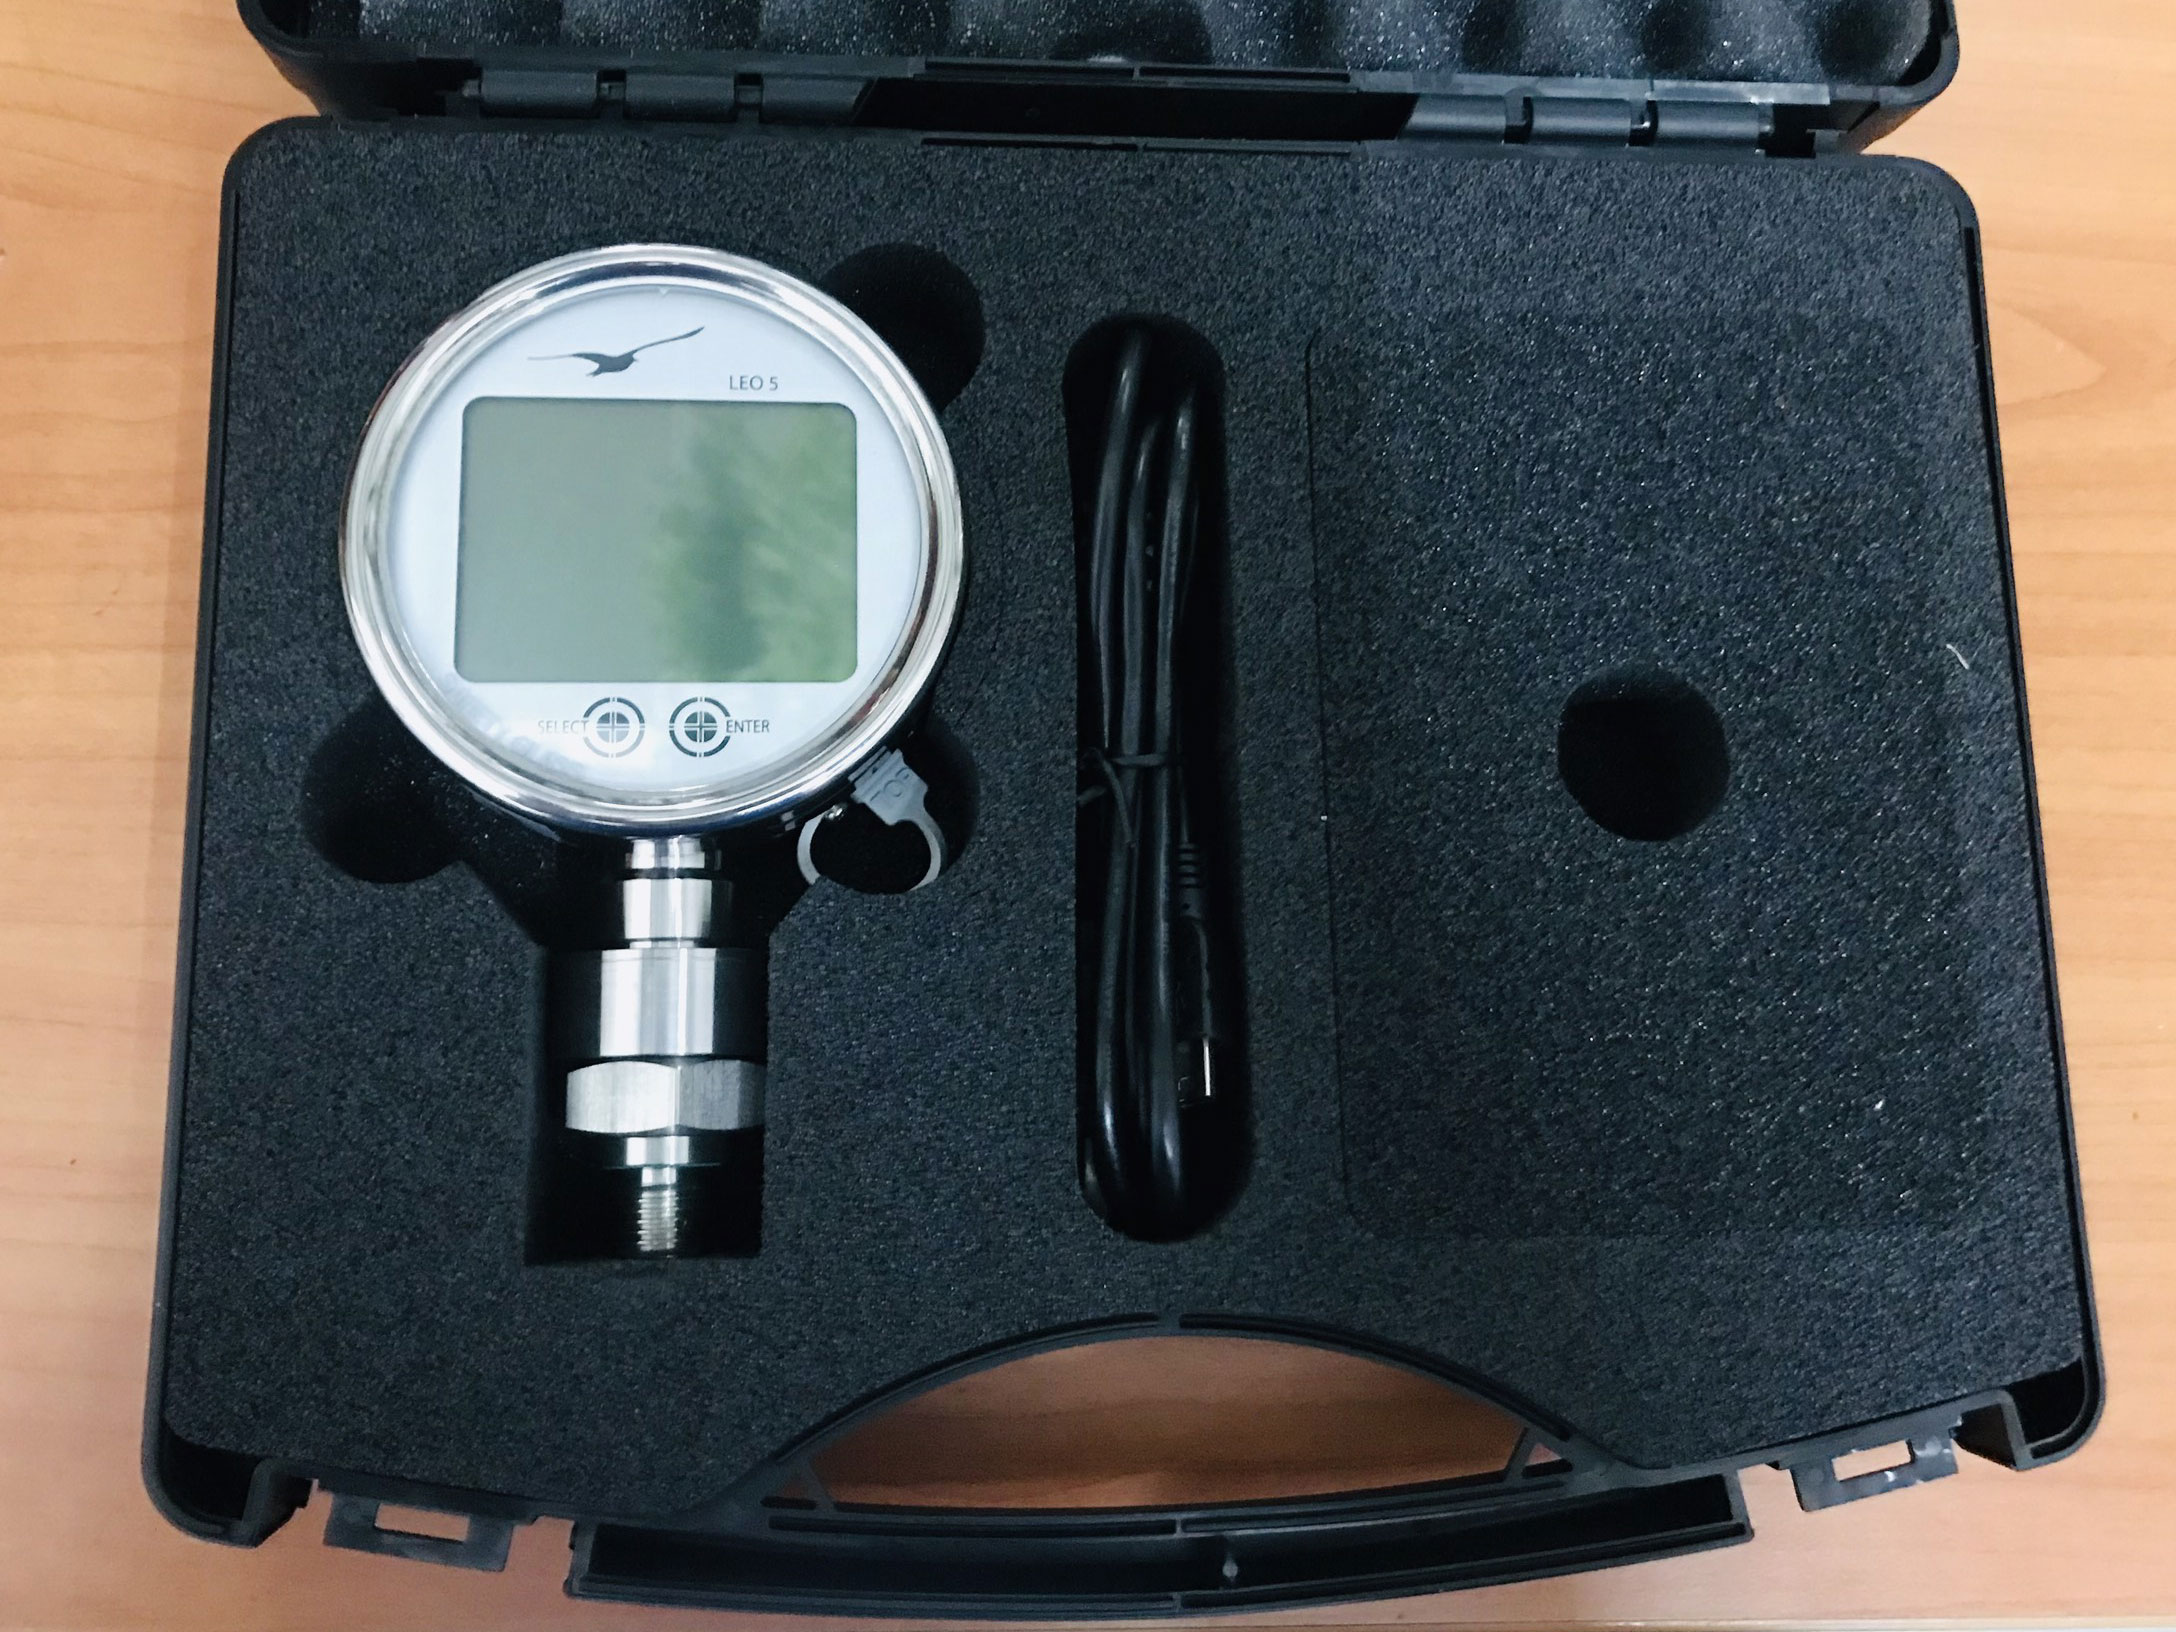 Đồng hồ đo áp suất LEO5